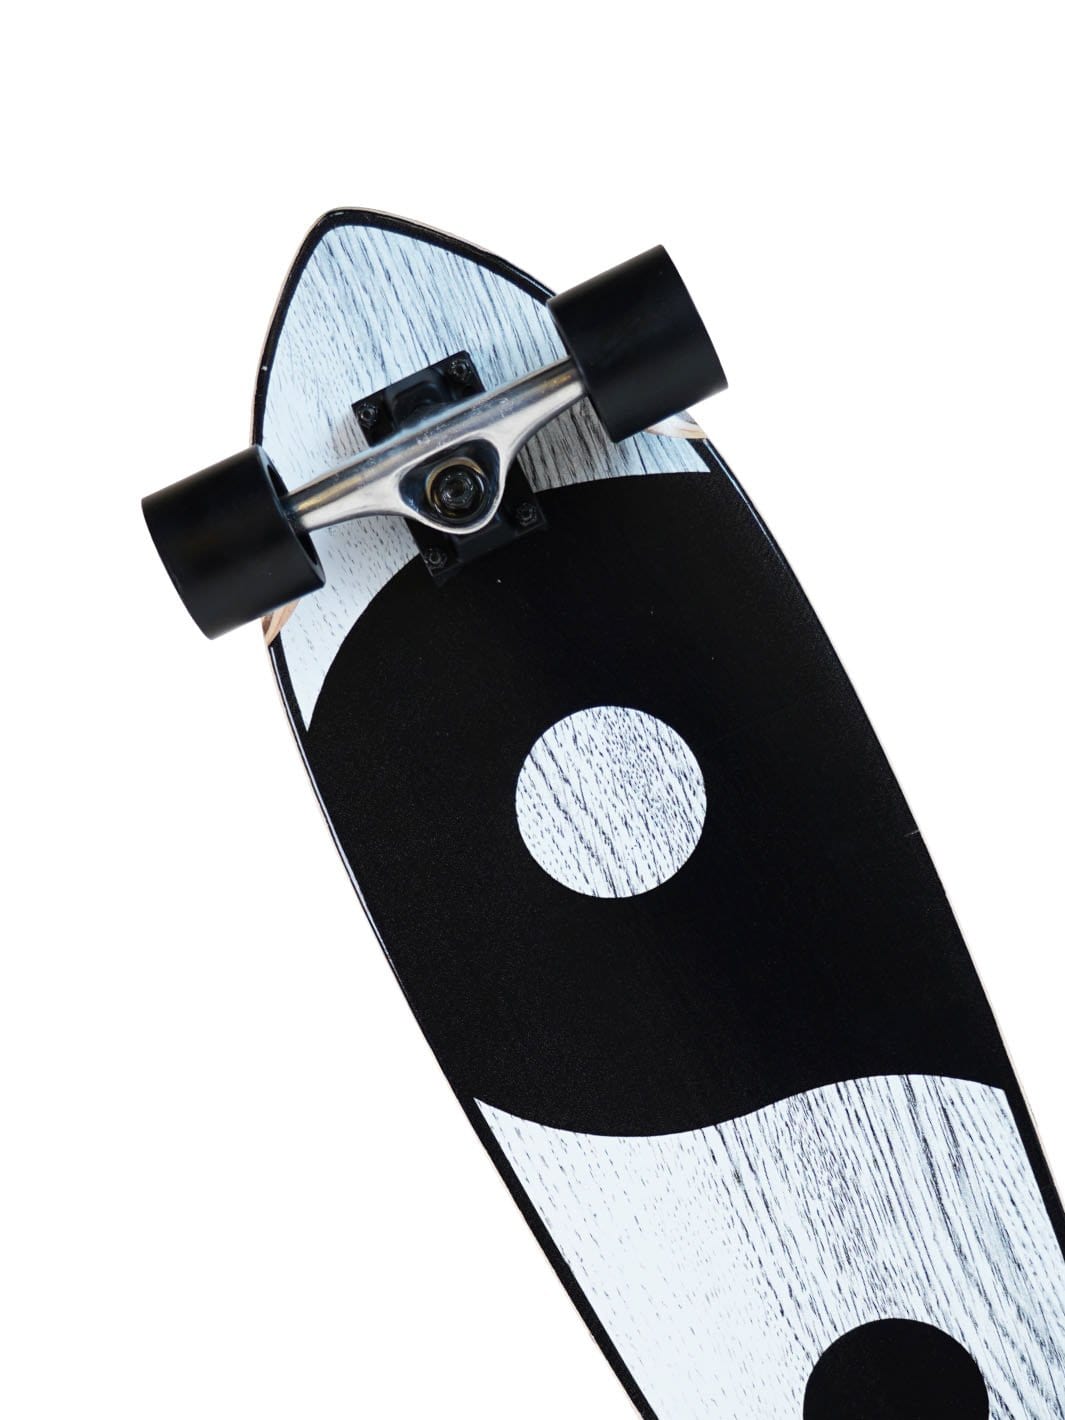 Madd Gear 32" Cruiser Board Skateboard Maple Kids Children's High Quality Aluminum Trucks Black White Ying Yan